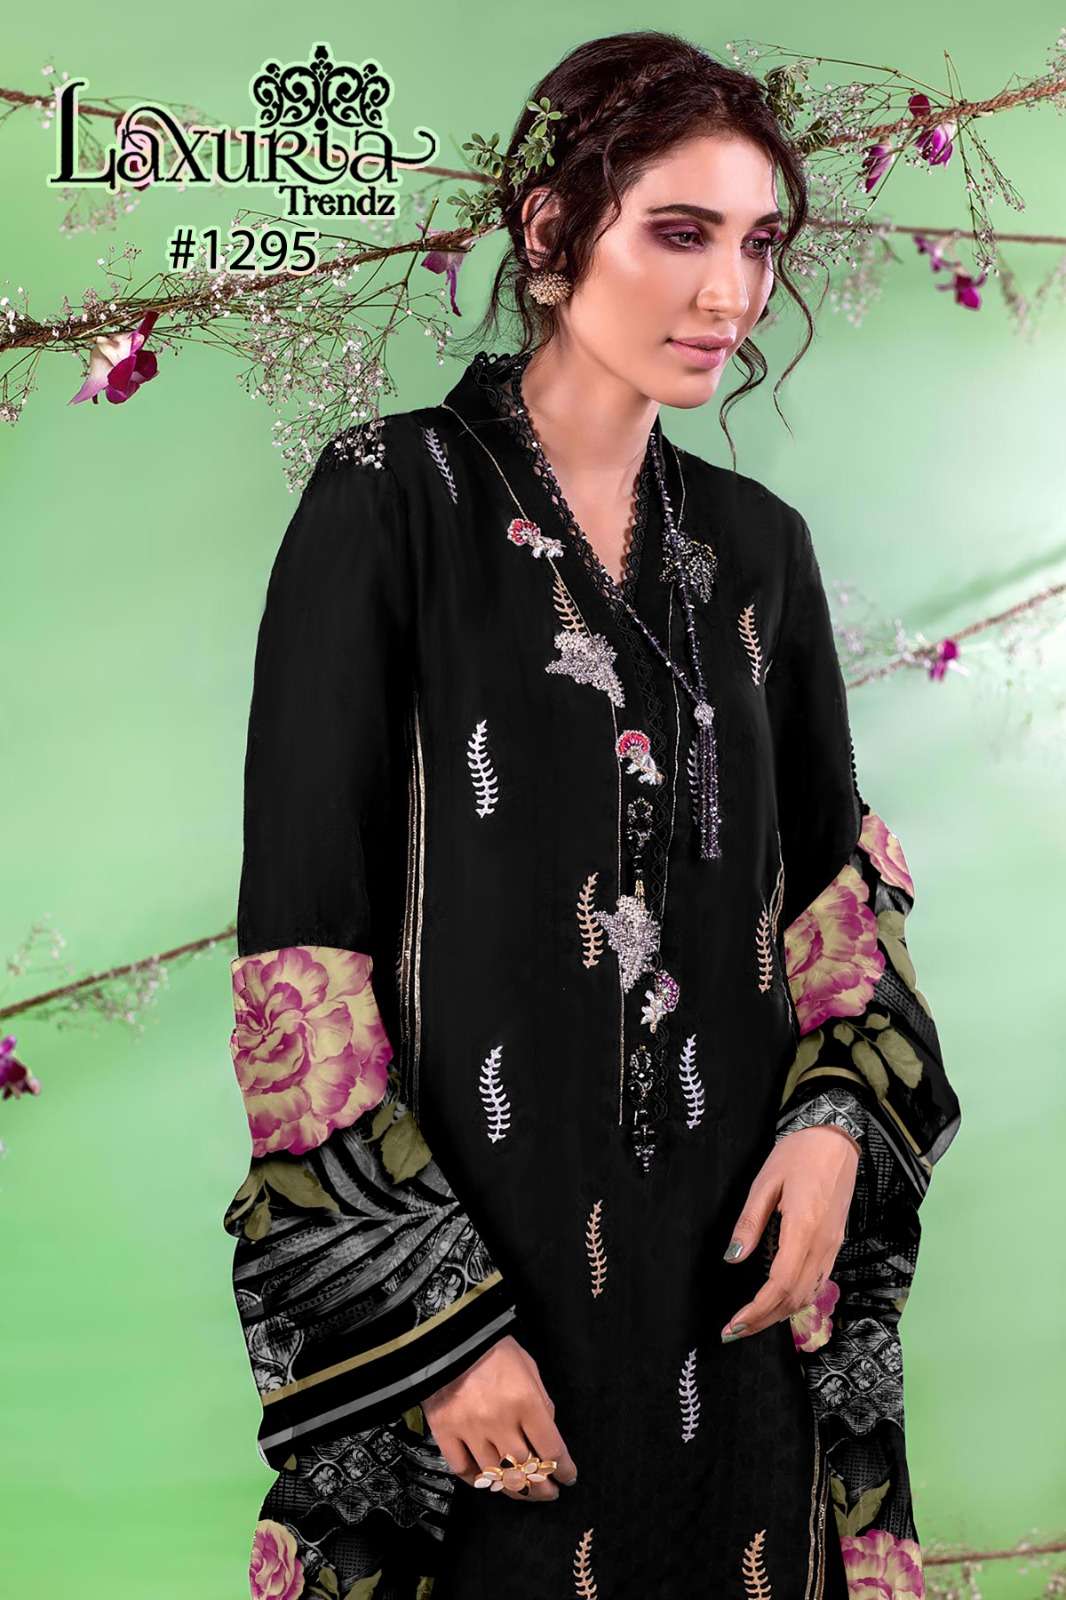 Classic Butter Silk Digital Print Work Pakistani Suit With Dupatta